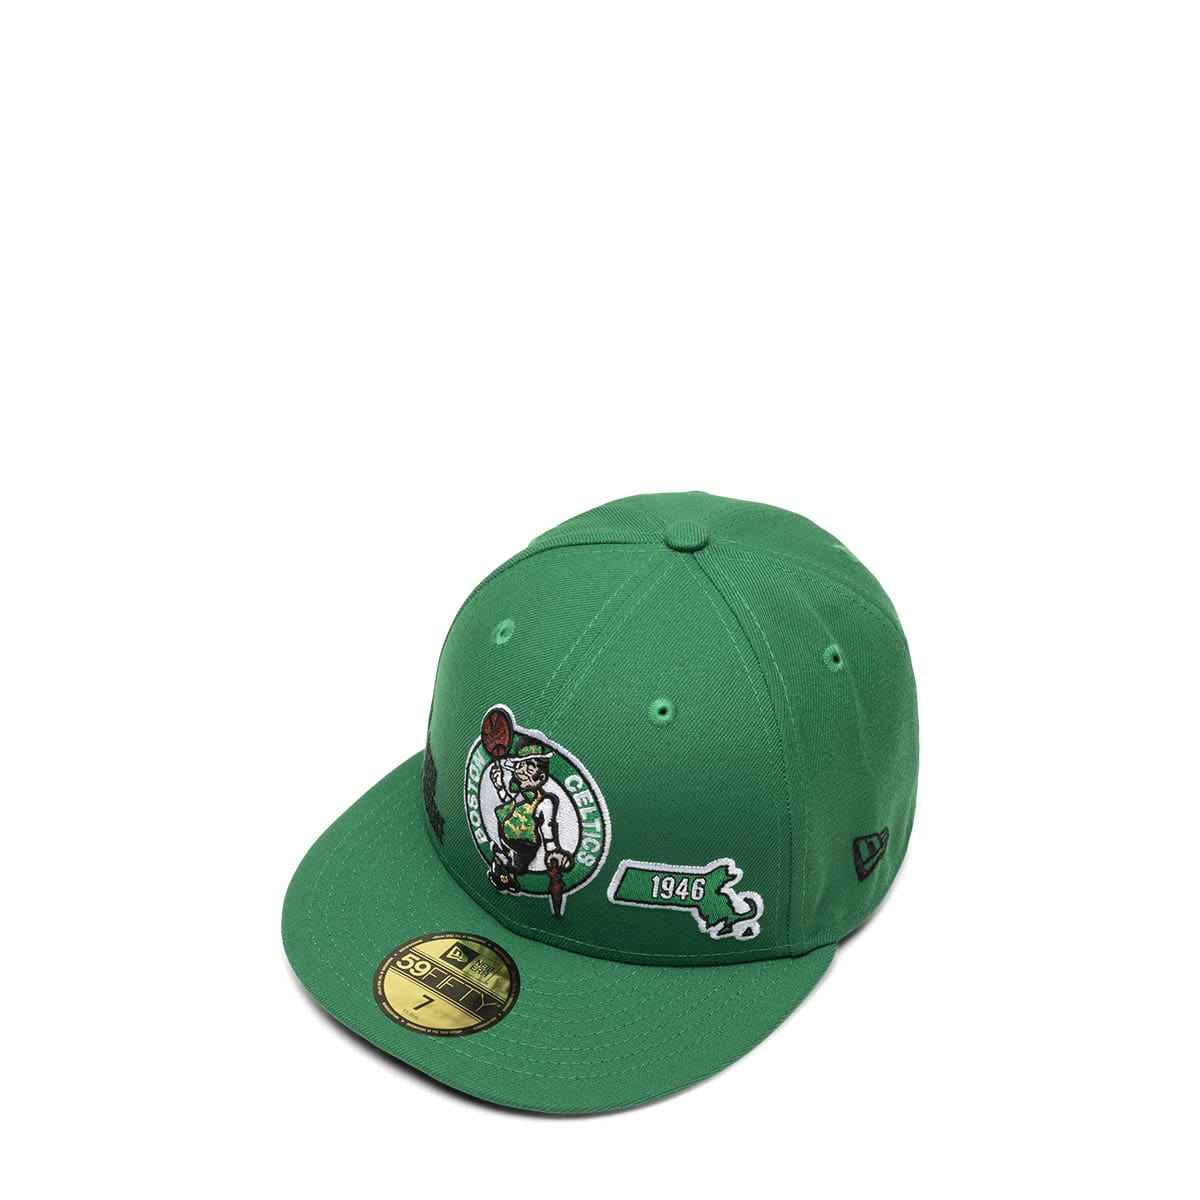 Todd Snyder x NBA Celtics New Era Hat